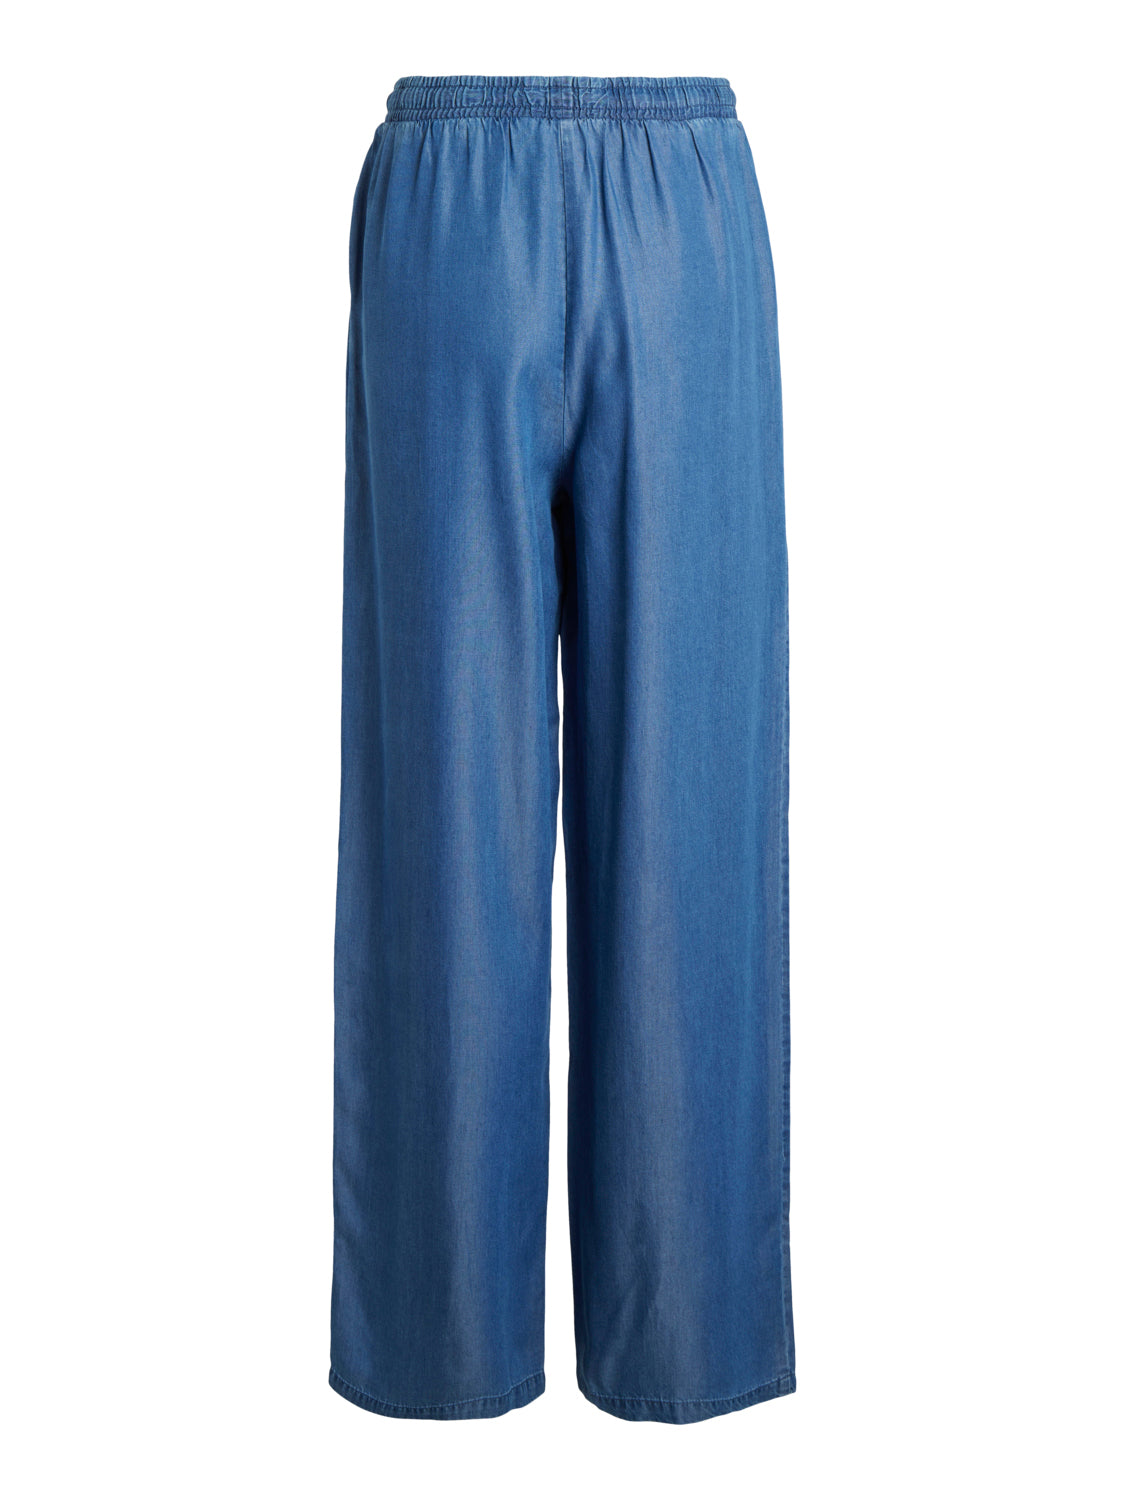 VIGIVANI Pants - Medium Blue Denim